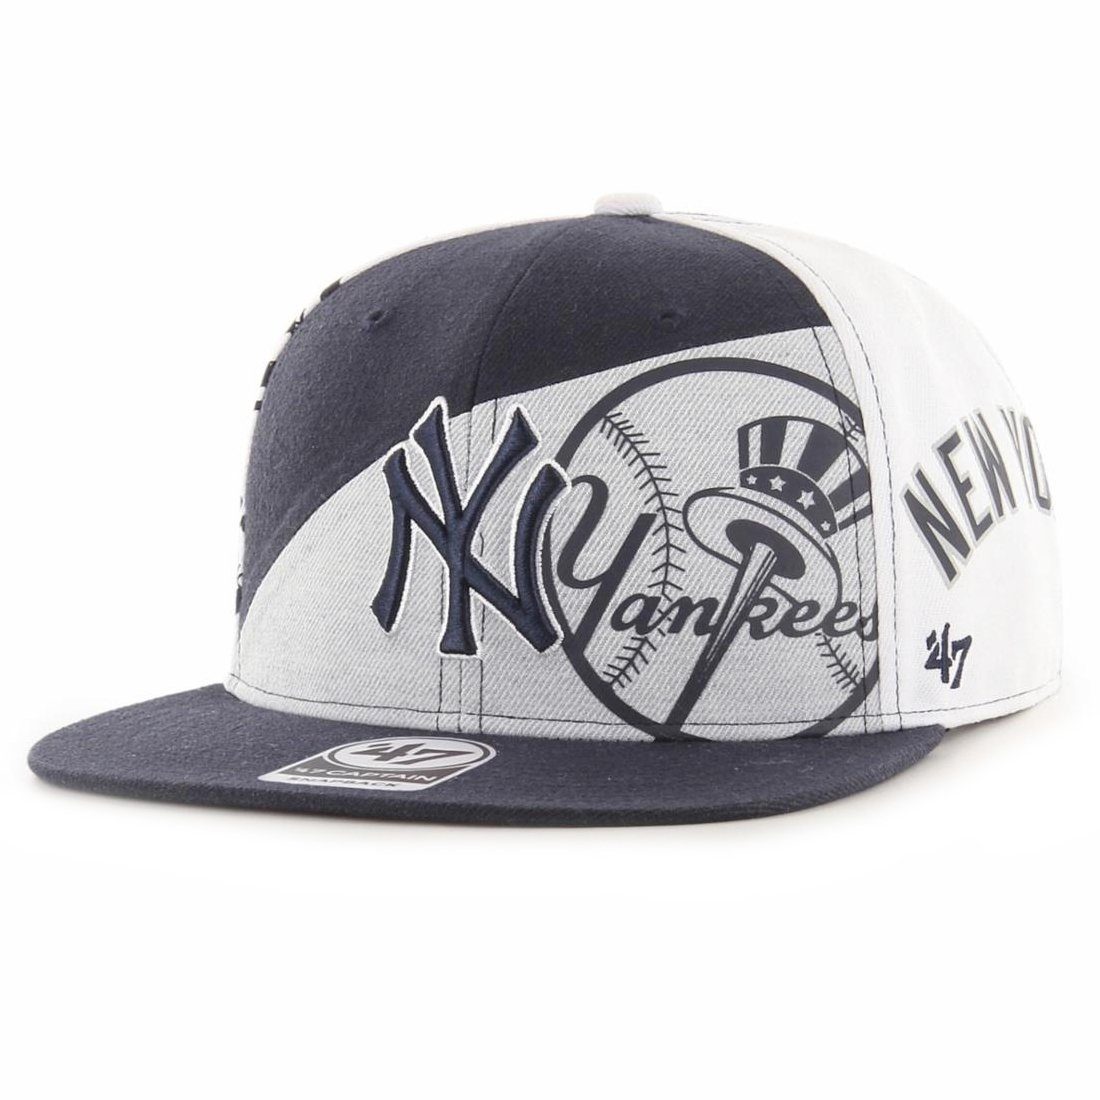 Cap Snapback Yankees Brand PATCHWORK '47 York New